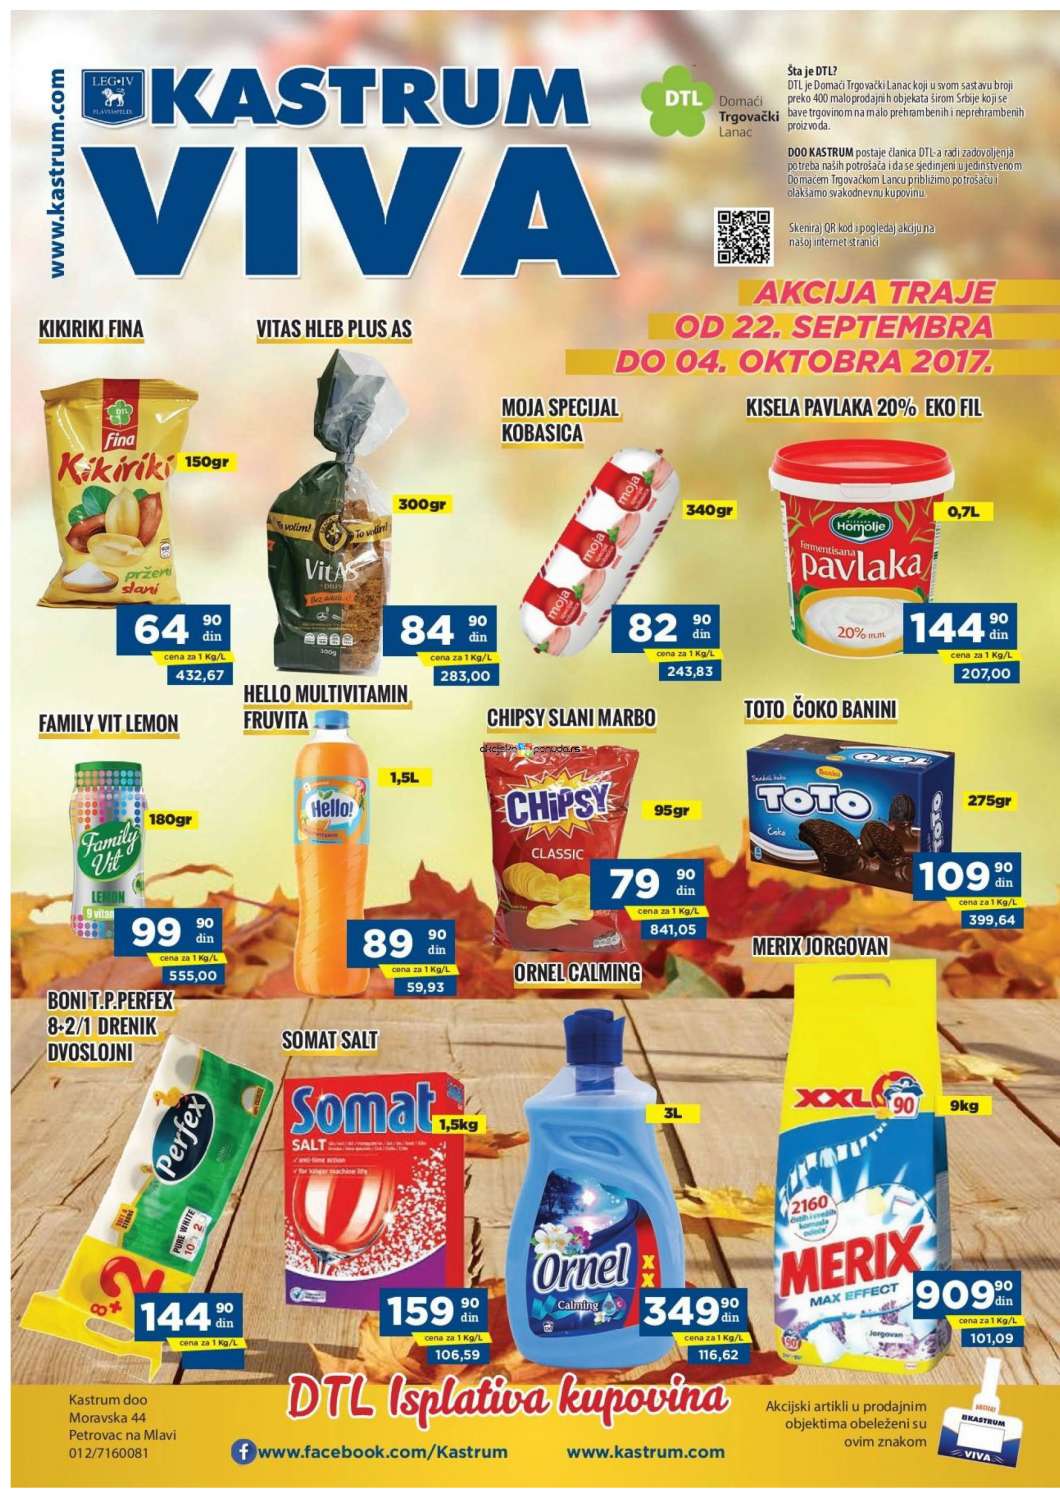 Kastrum Viva akcija, katalog 22. septembar do 4. oktobar 2017 62461